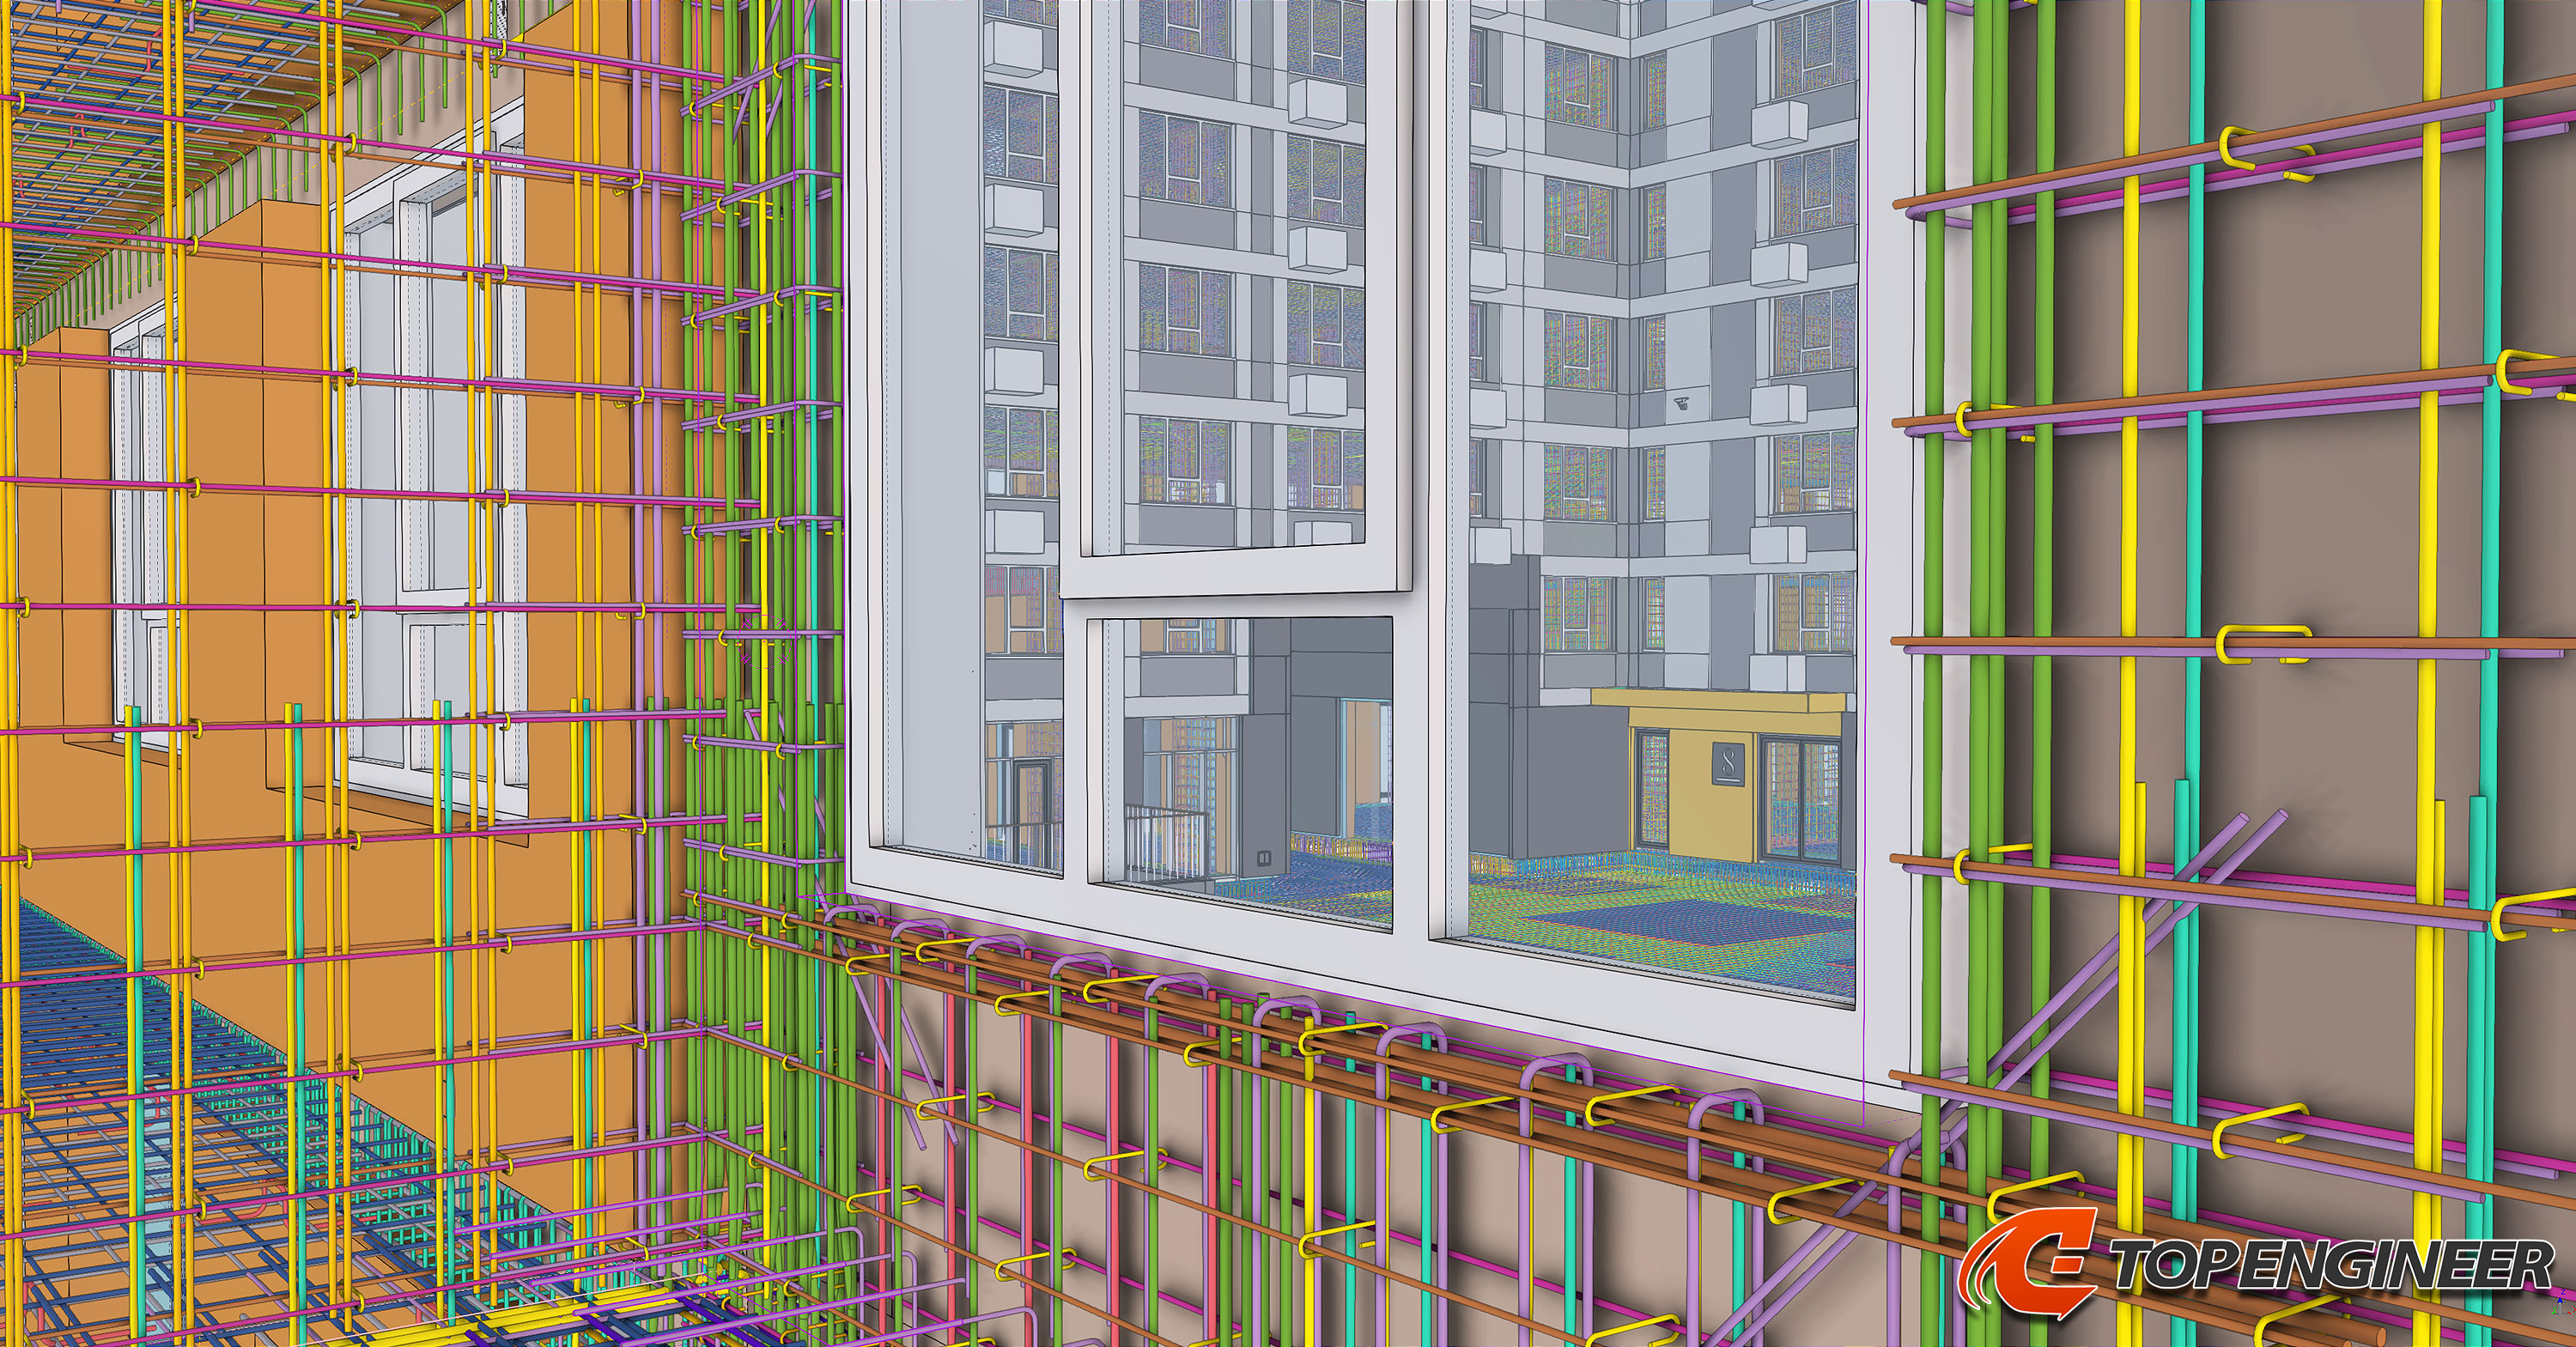 Bim building information model for residential complex in Tekla Structures